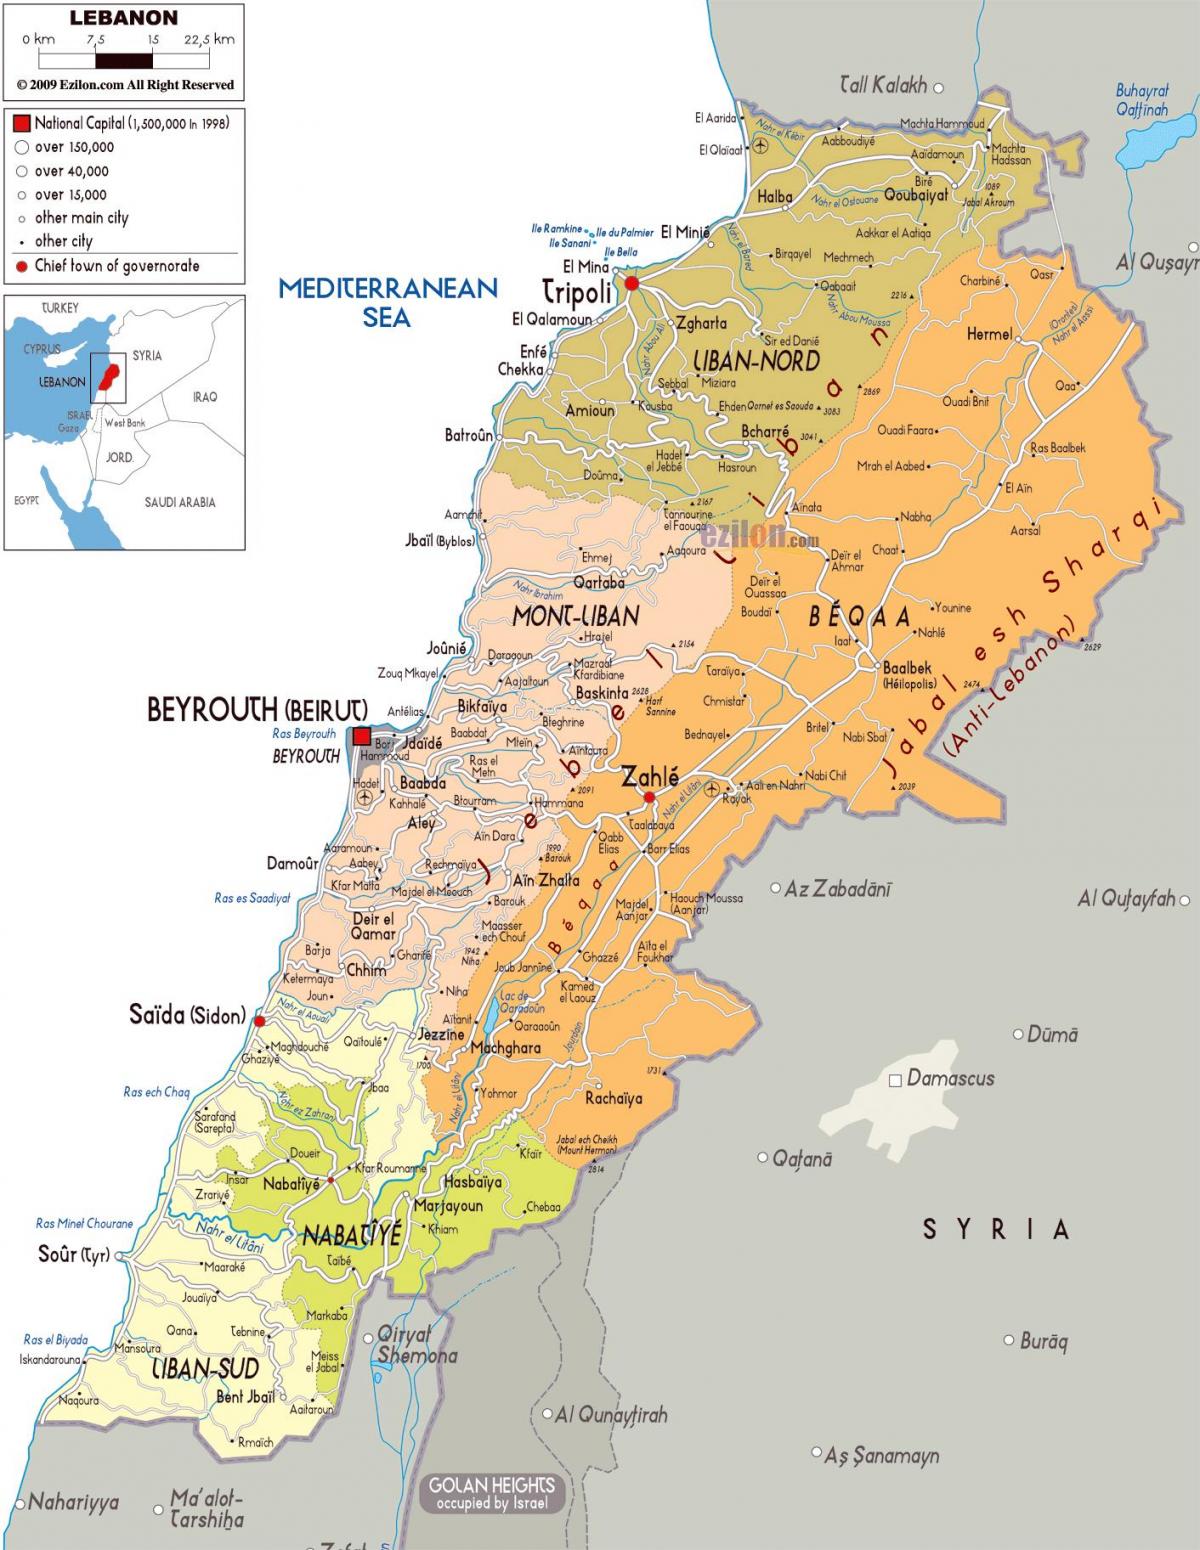 Lebanon peta rinci